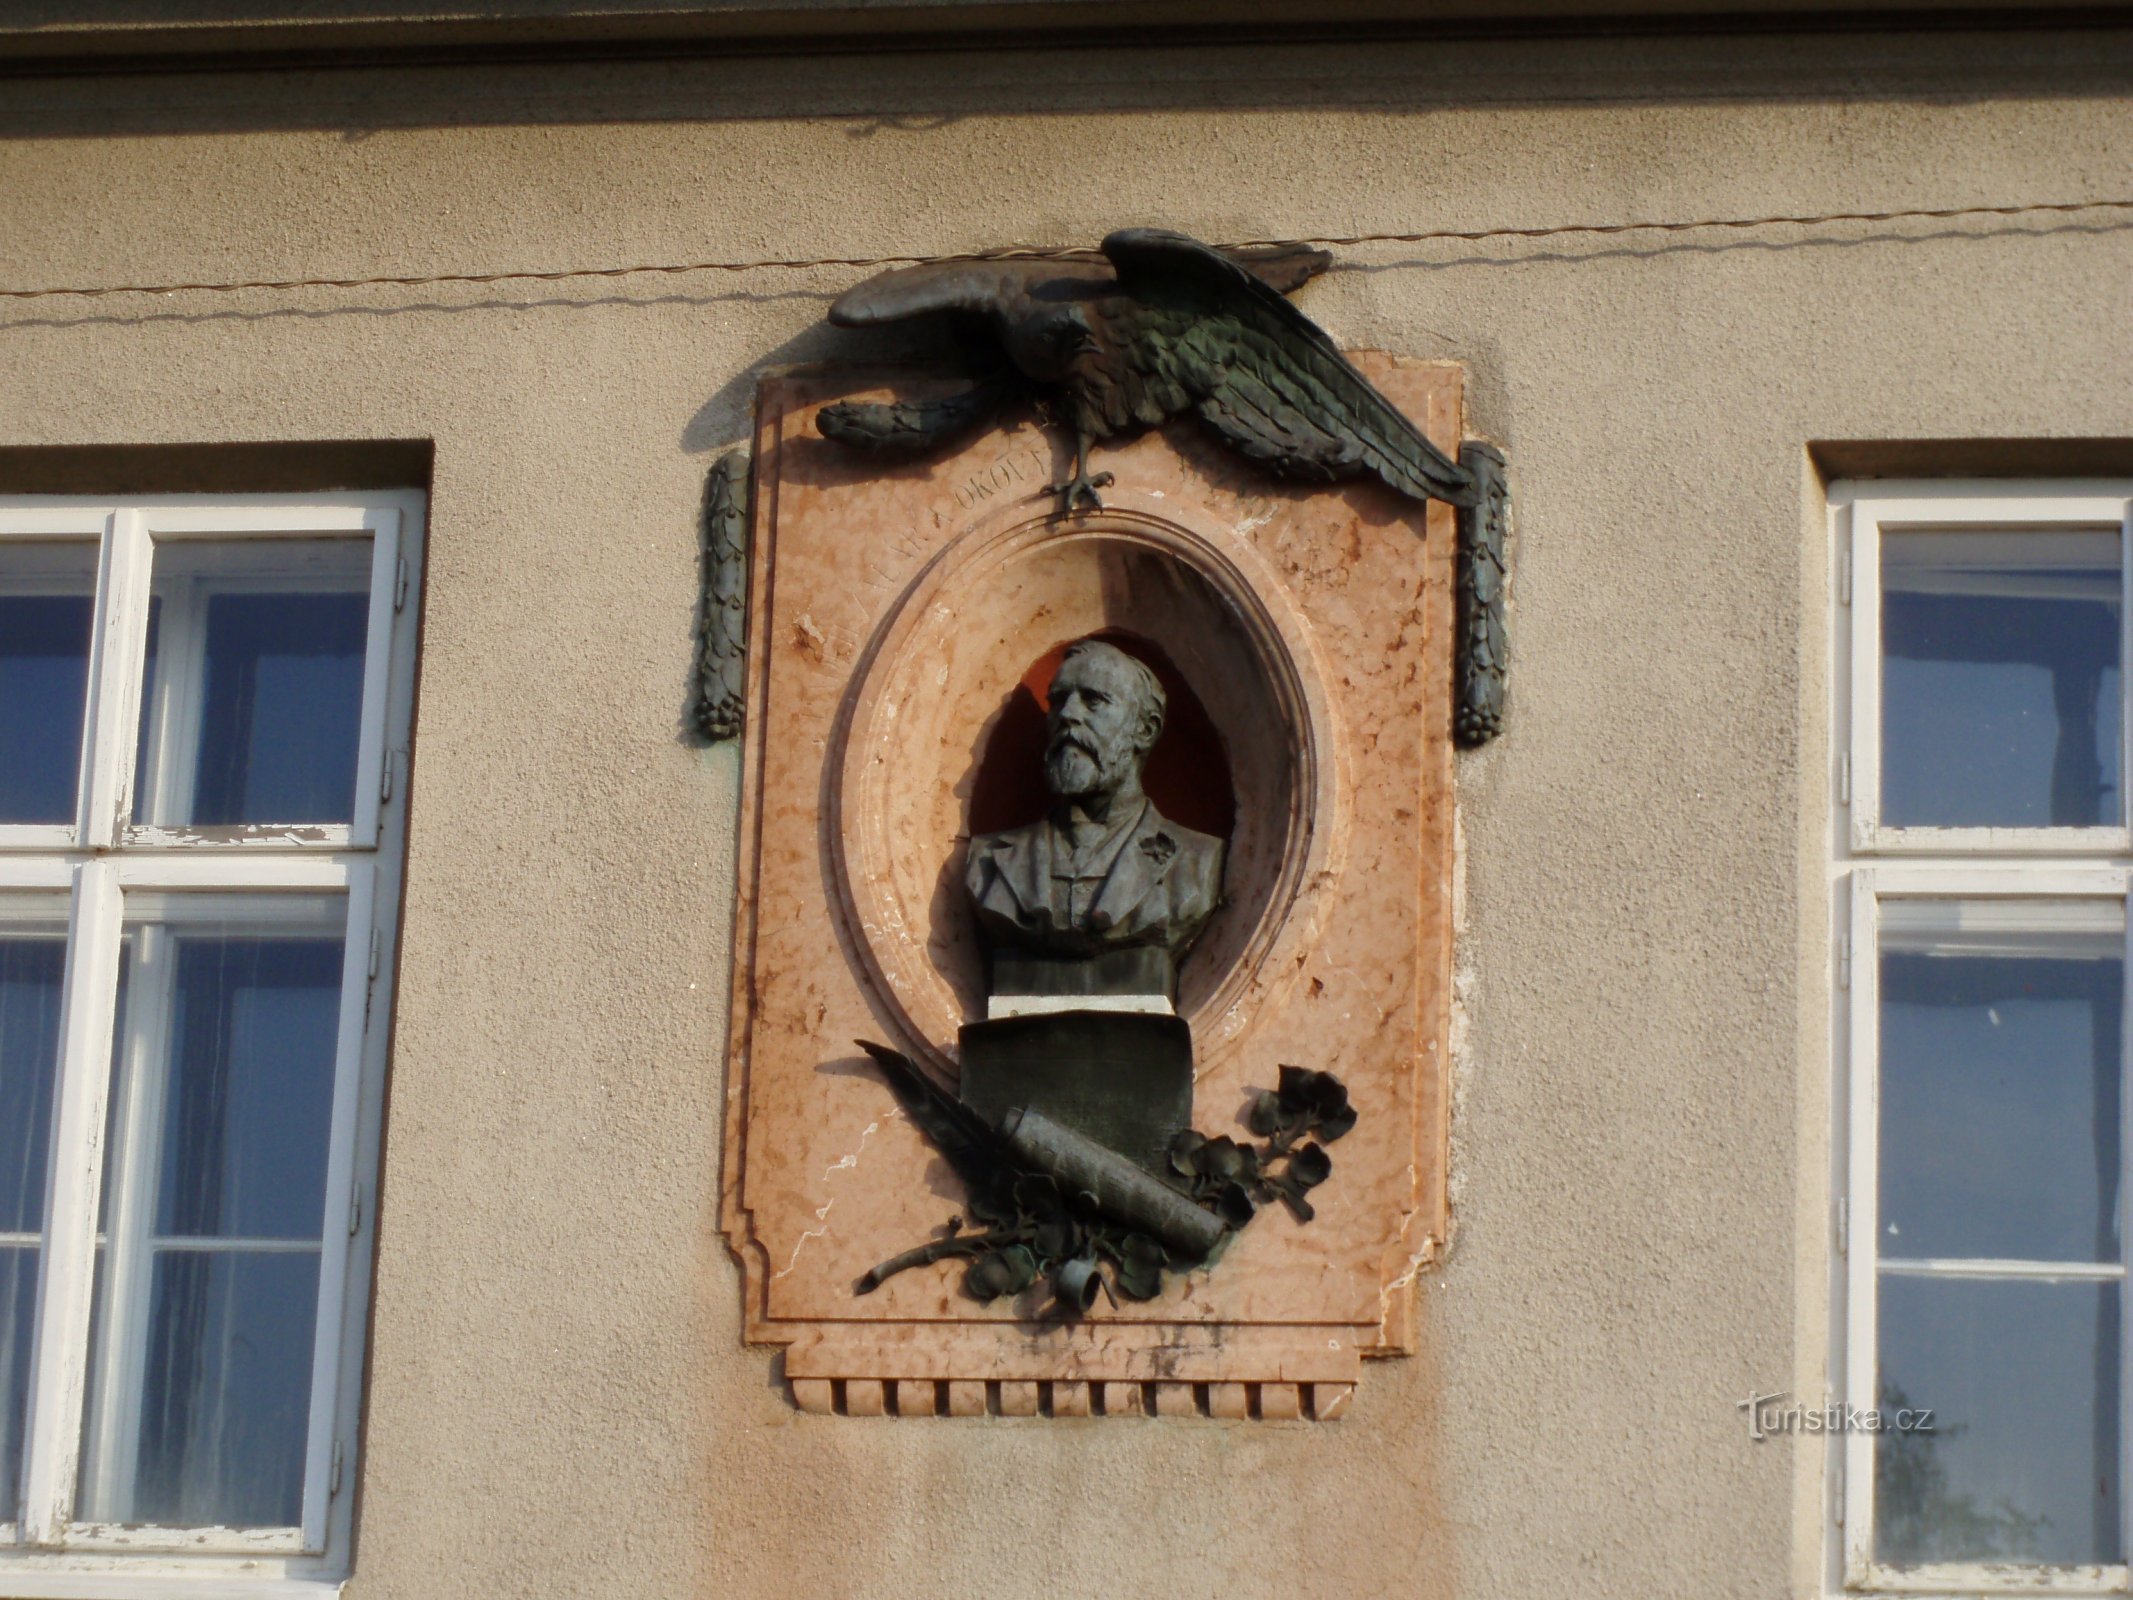 Gedenkplaat met een buste van JUDr. Julia Grégra voordat de buste verdween (Hradec Králové)